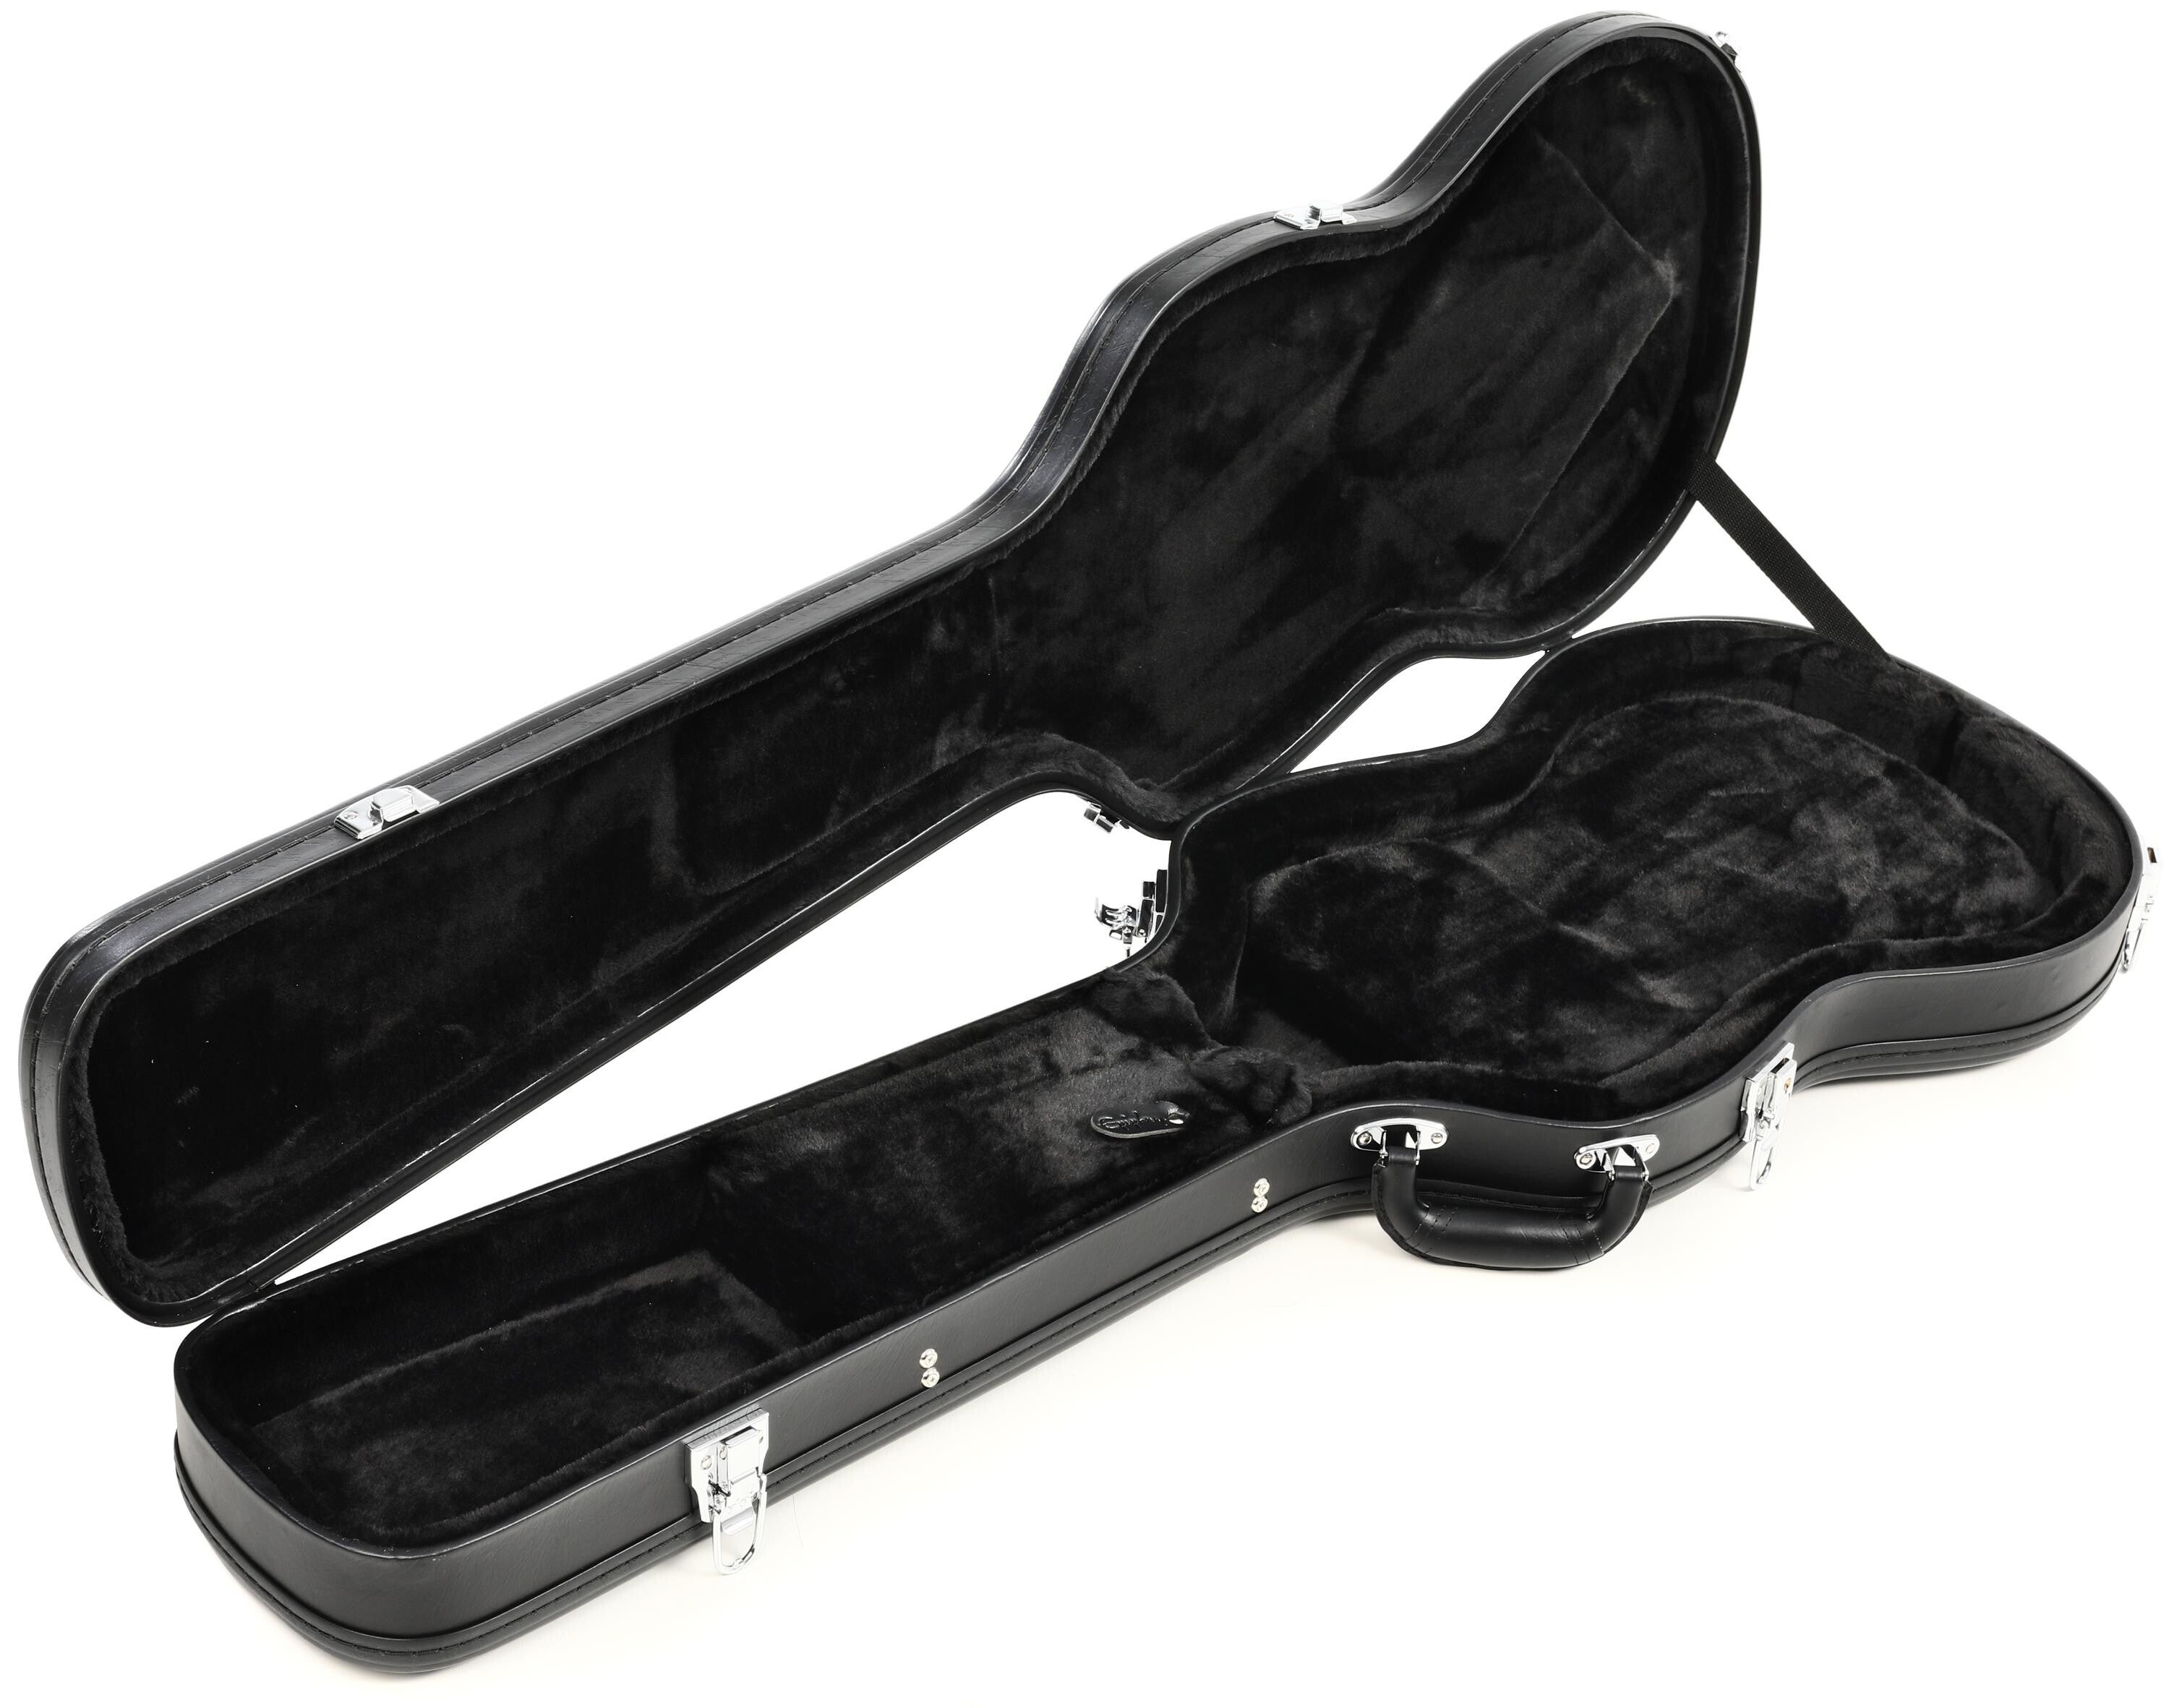 Epiphone Embassy Pro Bass Guitar Case - Black